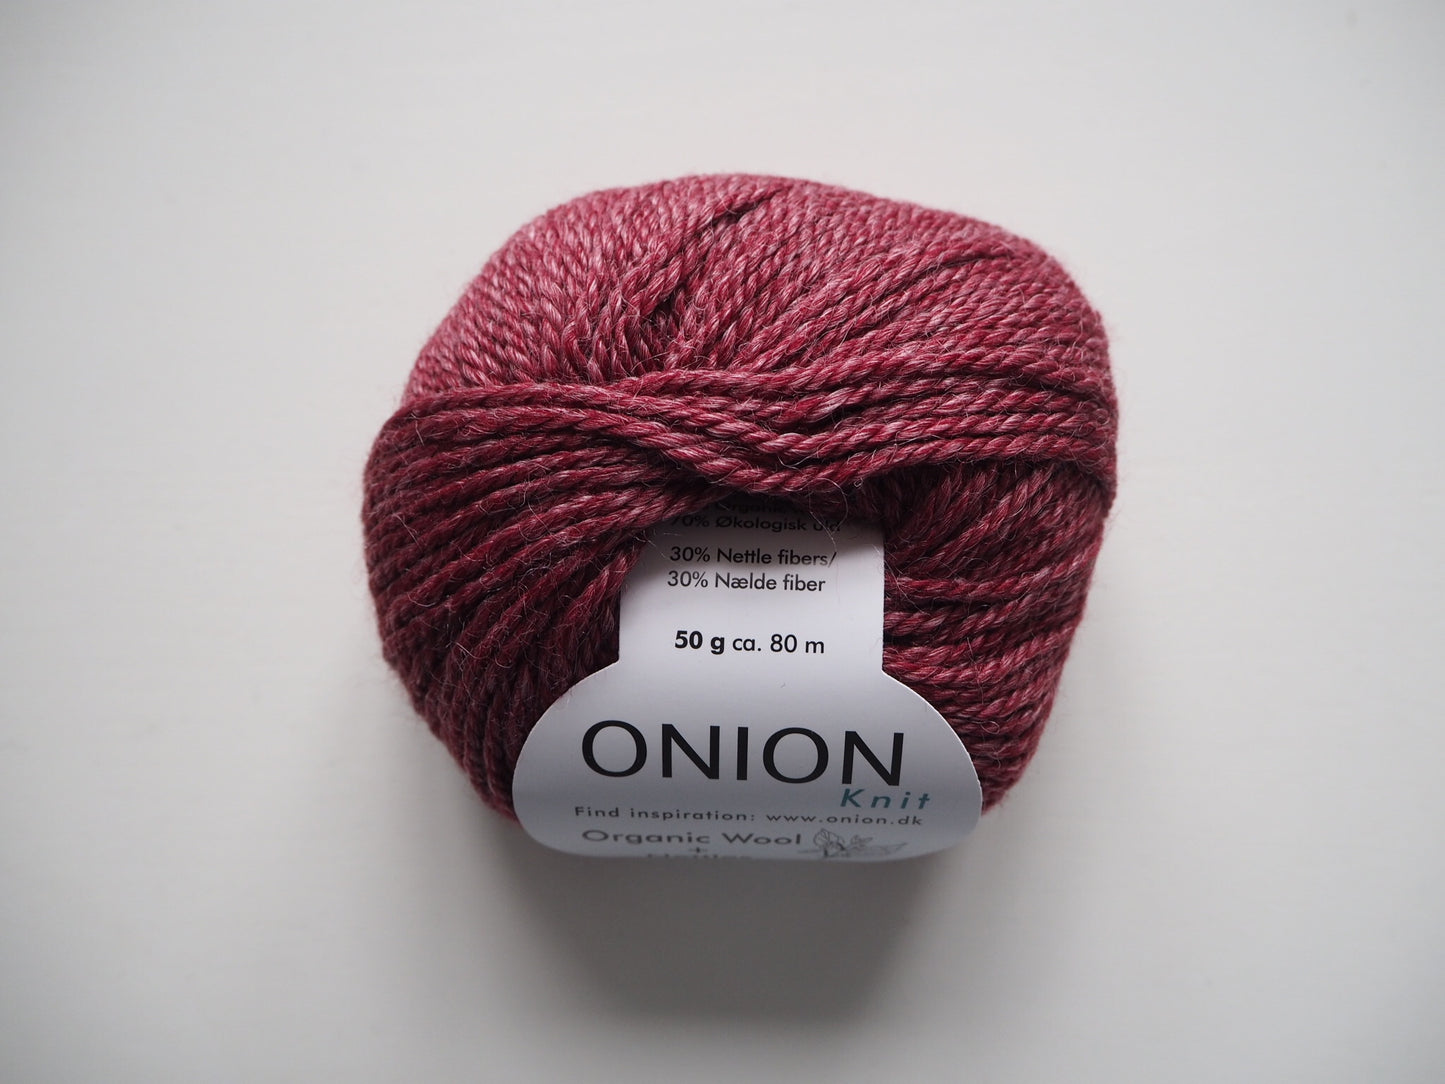 Onion No. 6 Organic Wool + Nettles 618 Mørk Rød